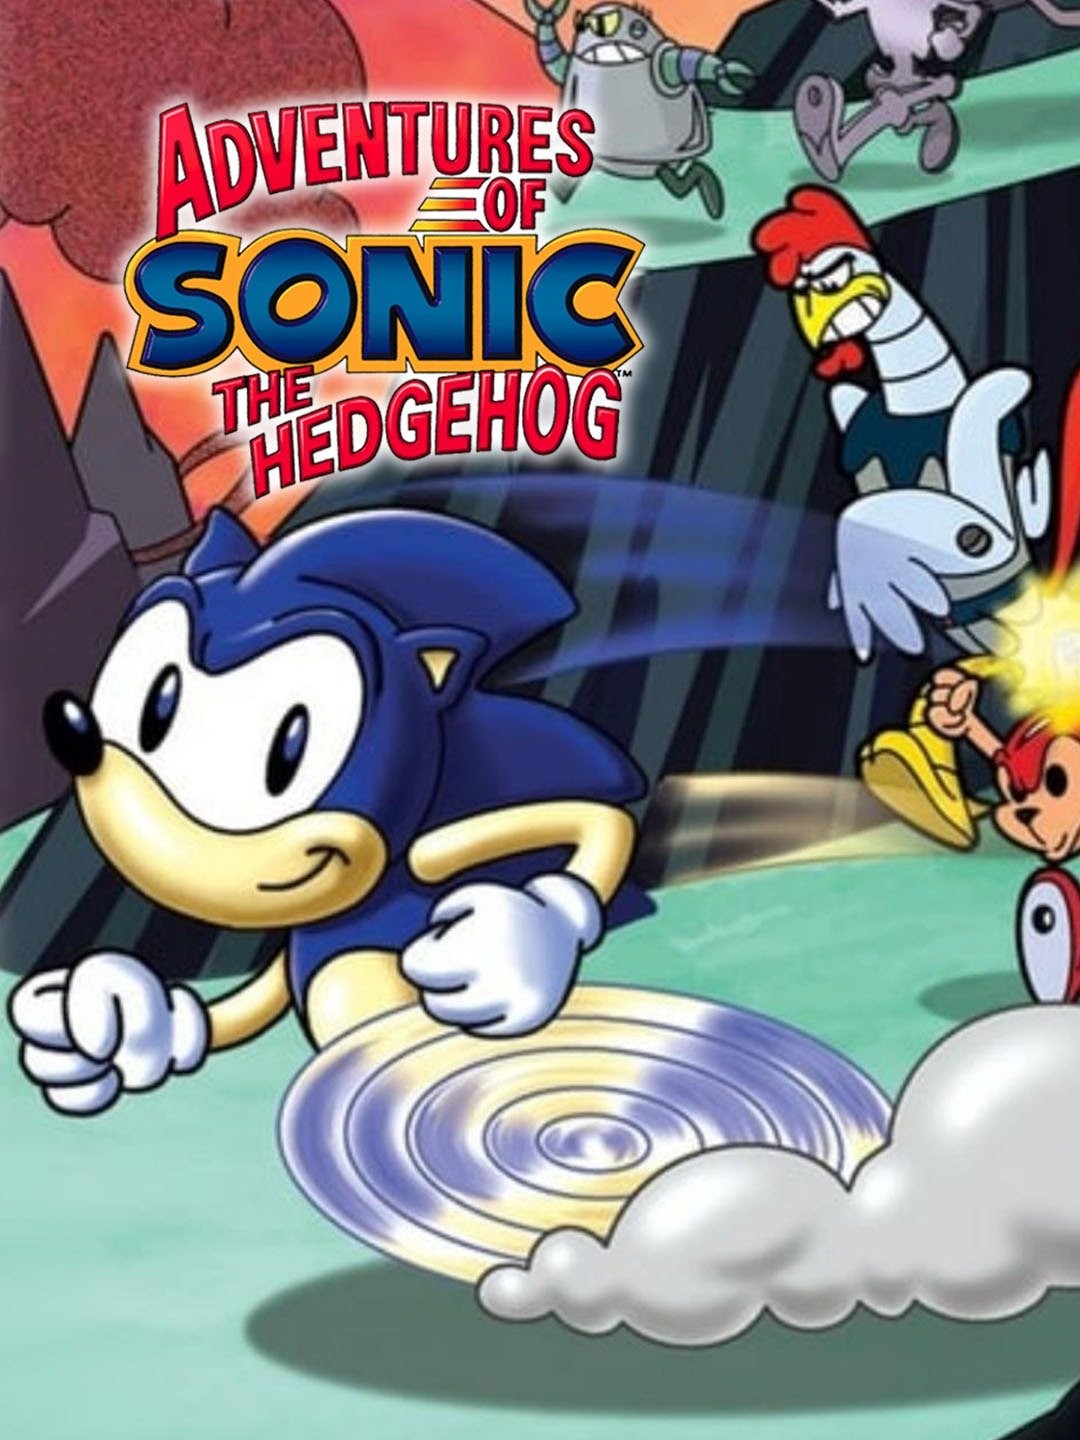 Sonic The Hedgehog 2 - Full Cast & Crew - TV Guide